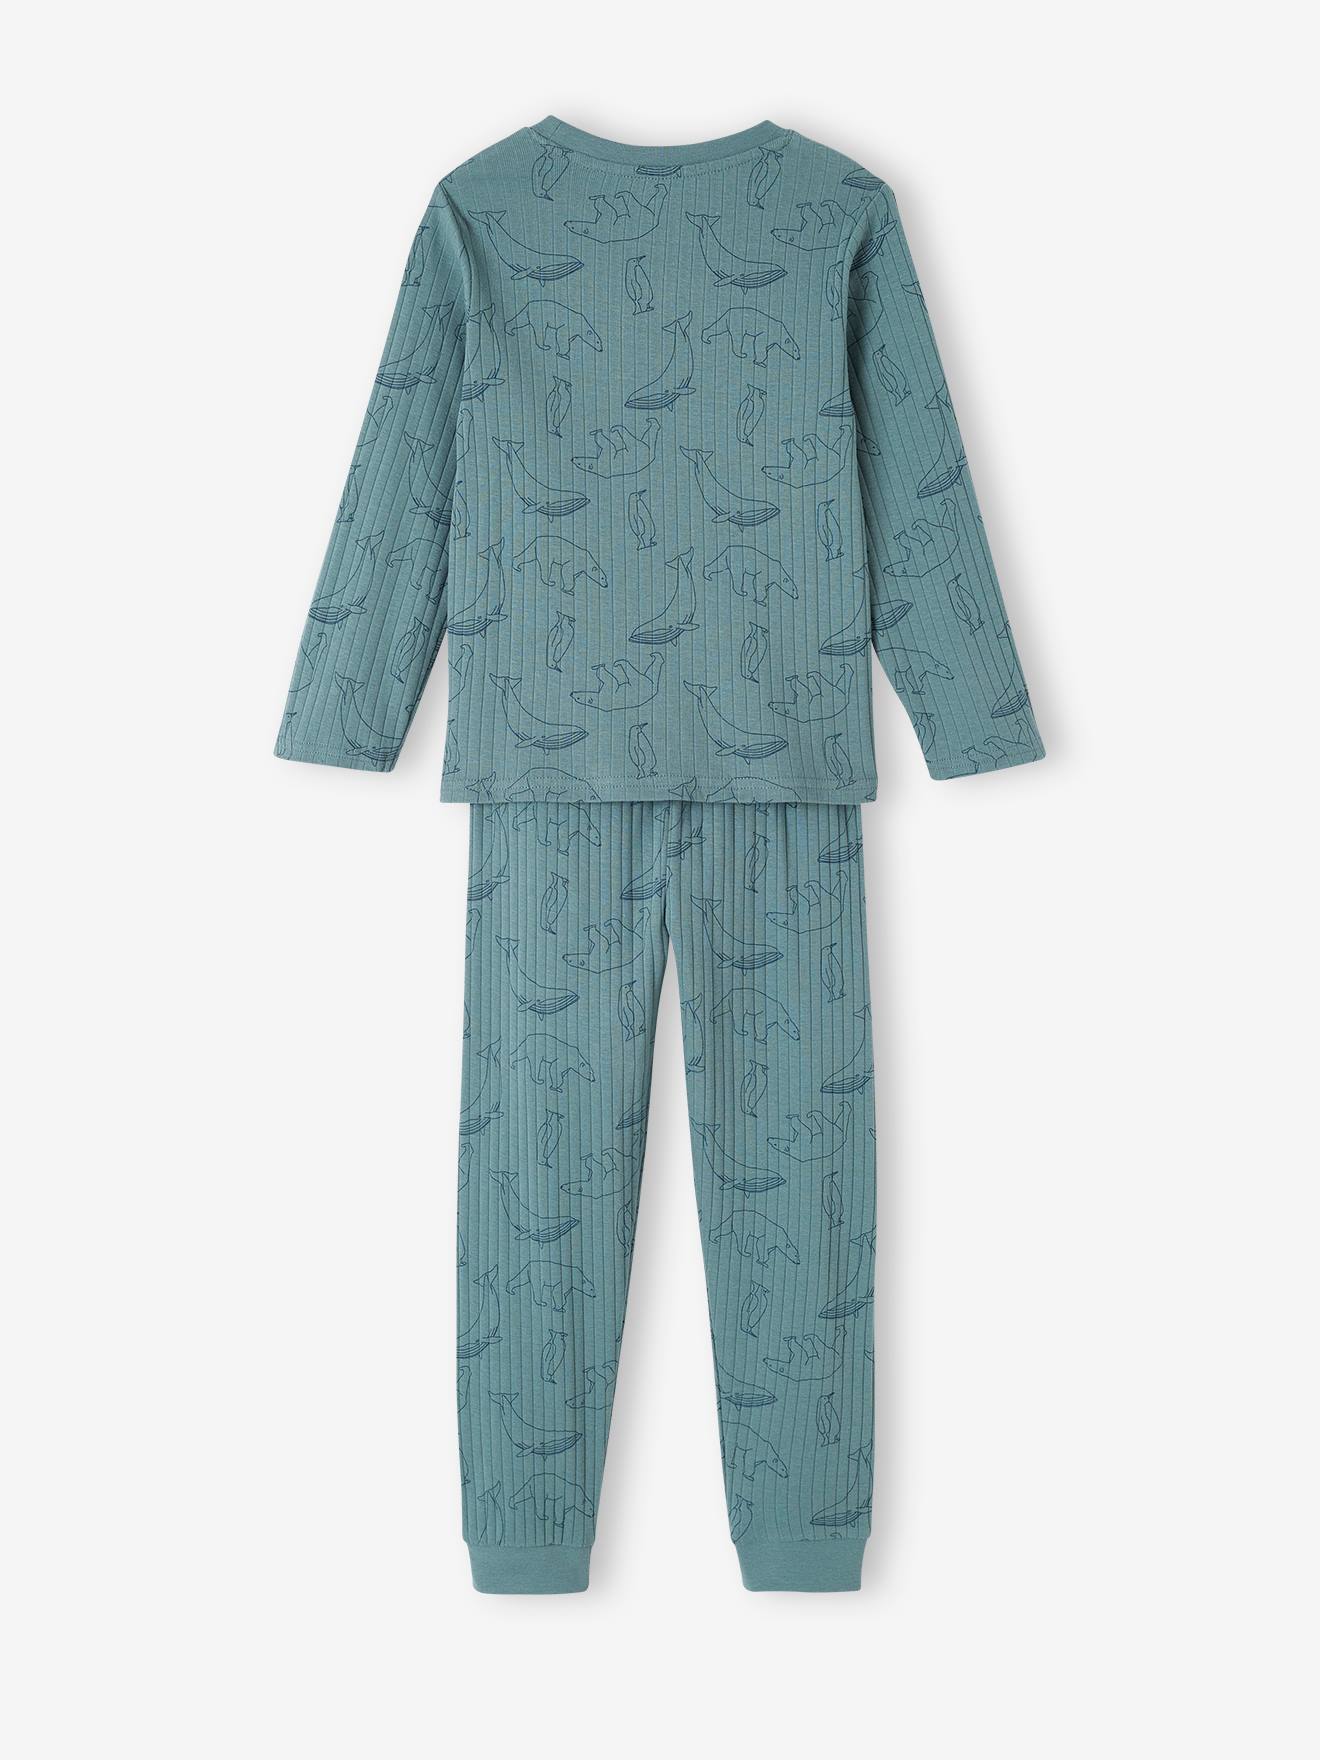 Pyjama Long Garçon en Coton - Gris Chiné Imprimé / Vert